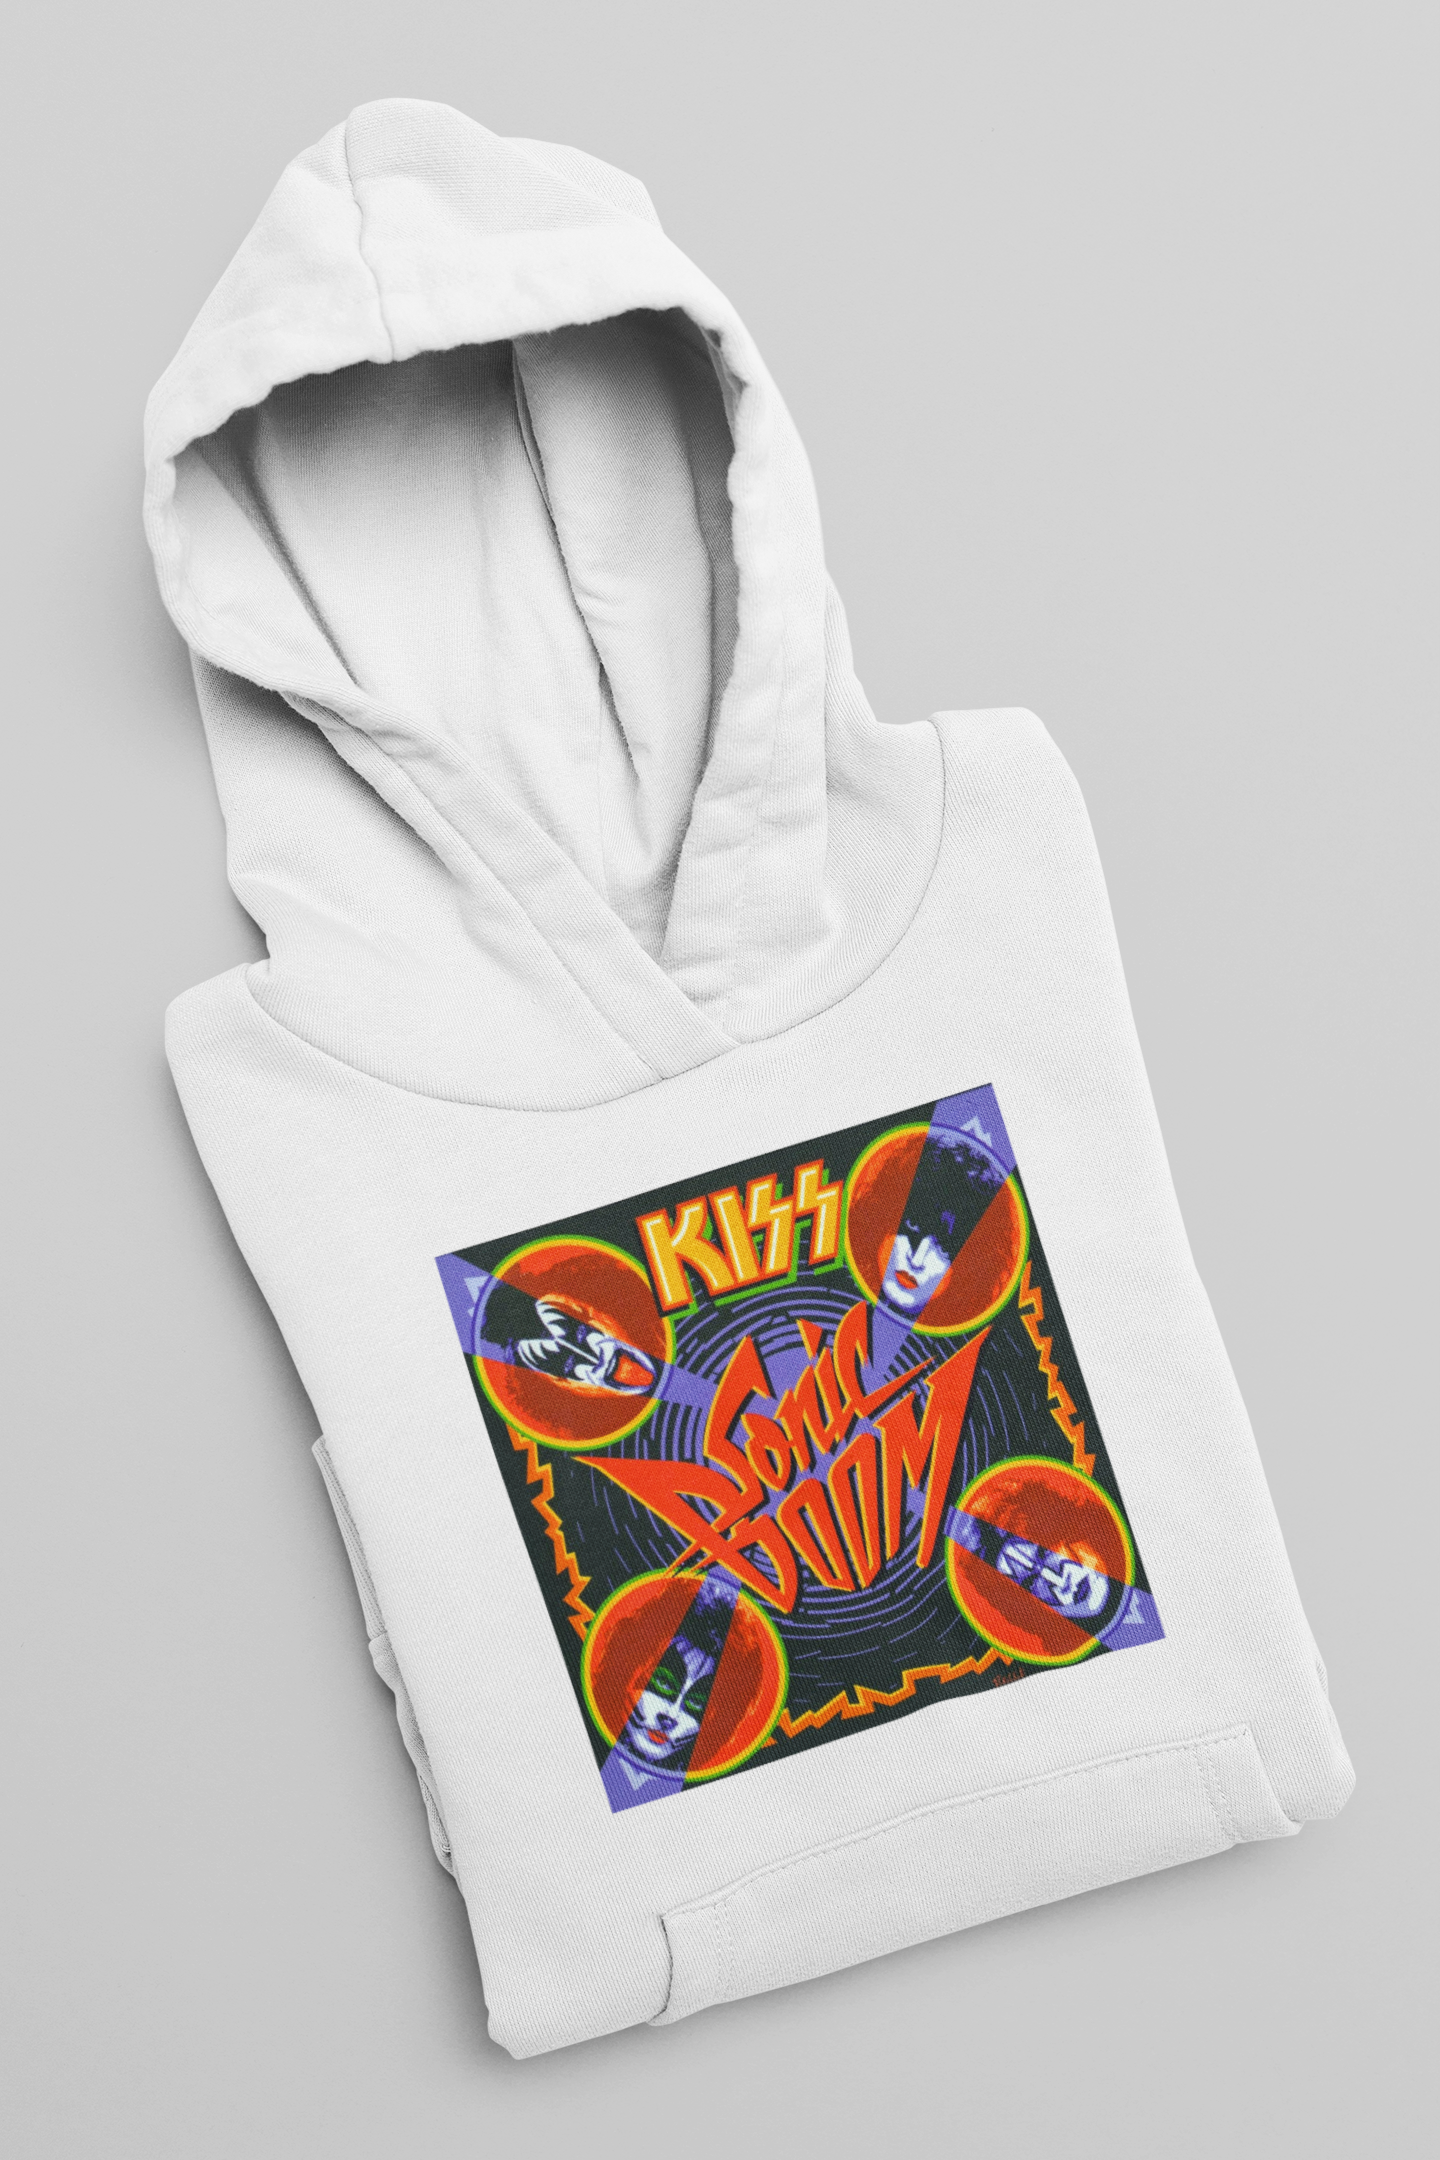 Camiseta 'Sonic Boom - Kiss' - Álbum - Música Projeto Fan Service